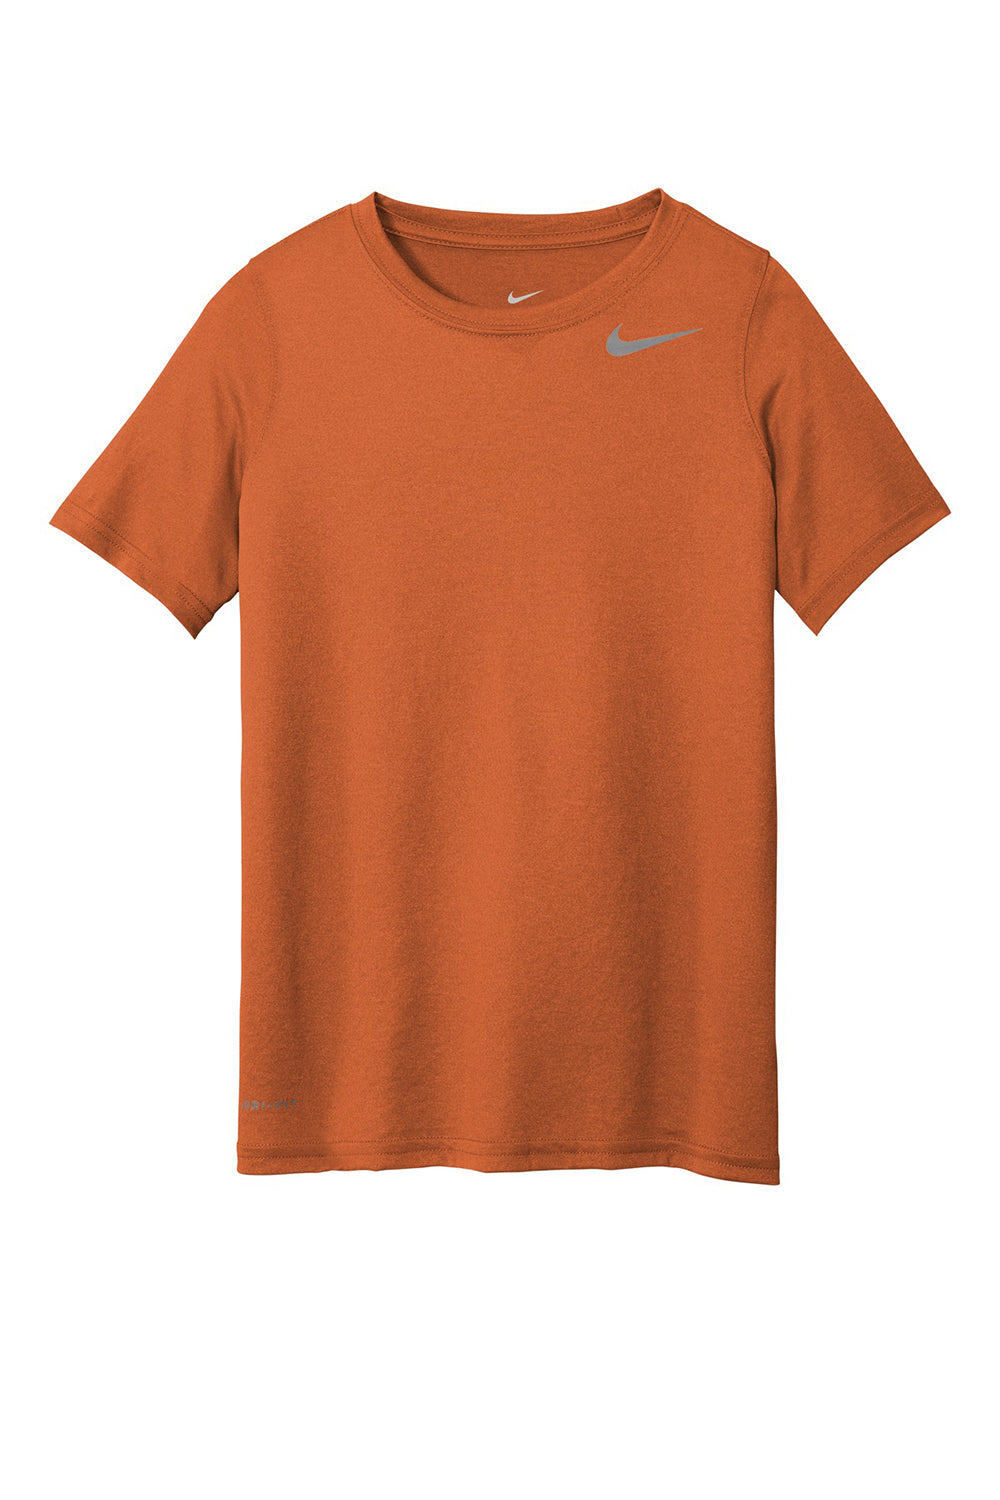 Nike 840178 Youth Legend Dri-Fit Moisture Wicking Short Sleeve Crewneck T-Shirt Desert Orange Flat Front